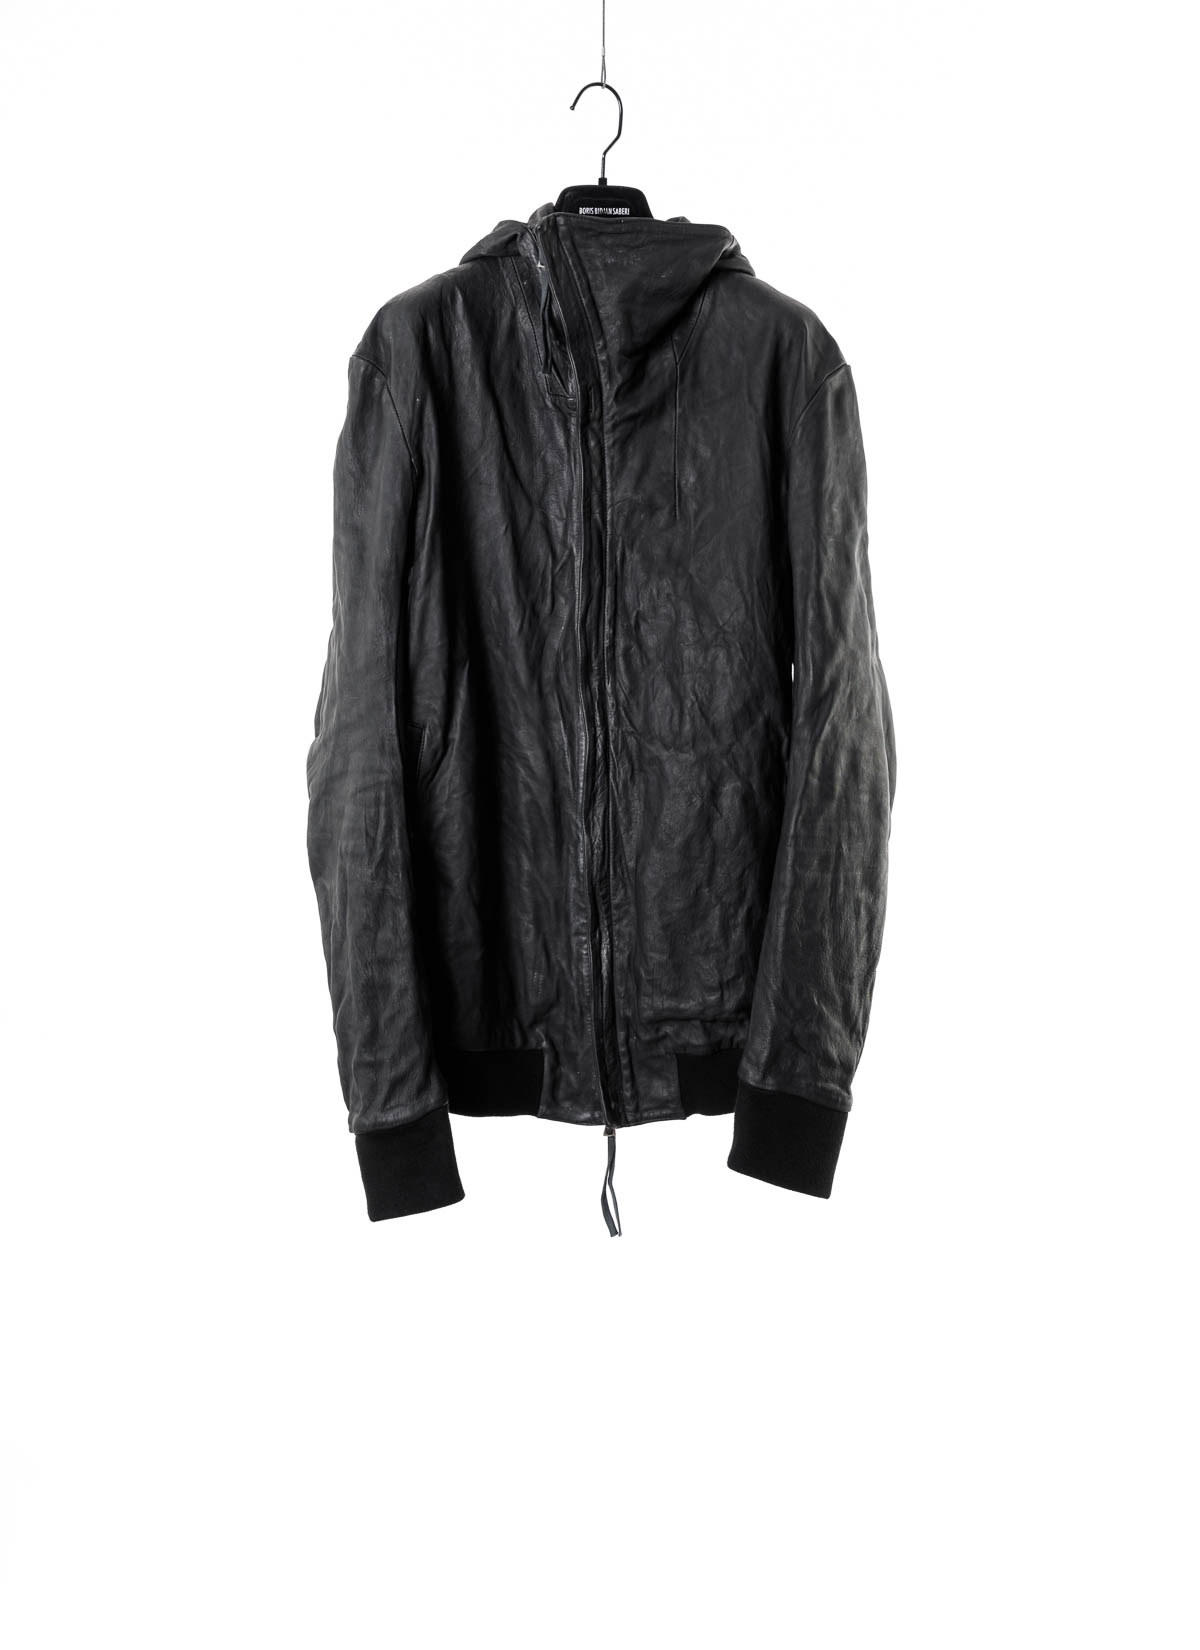 hide-m | BORIS BIDJAN SABERI Jacket ZIPPER22, exclusively, black